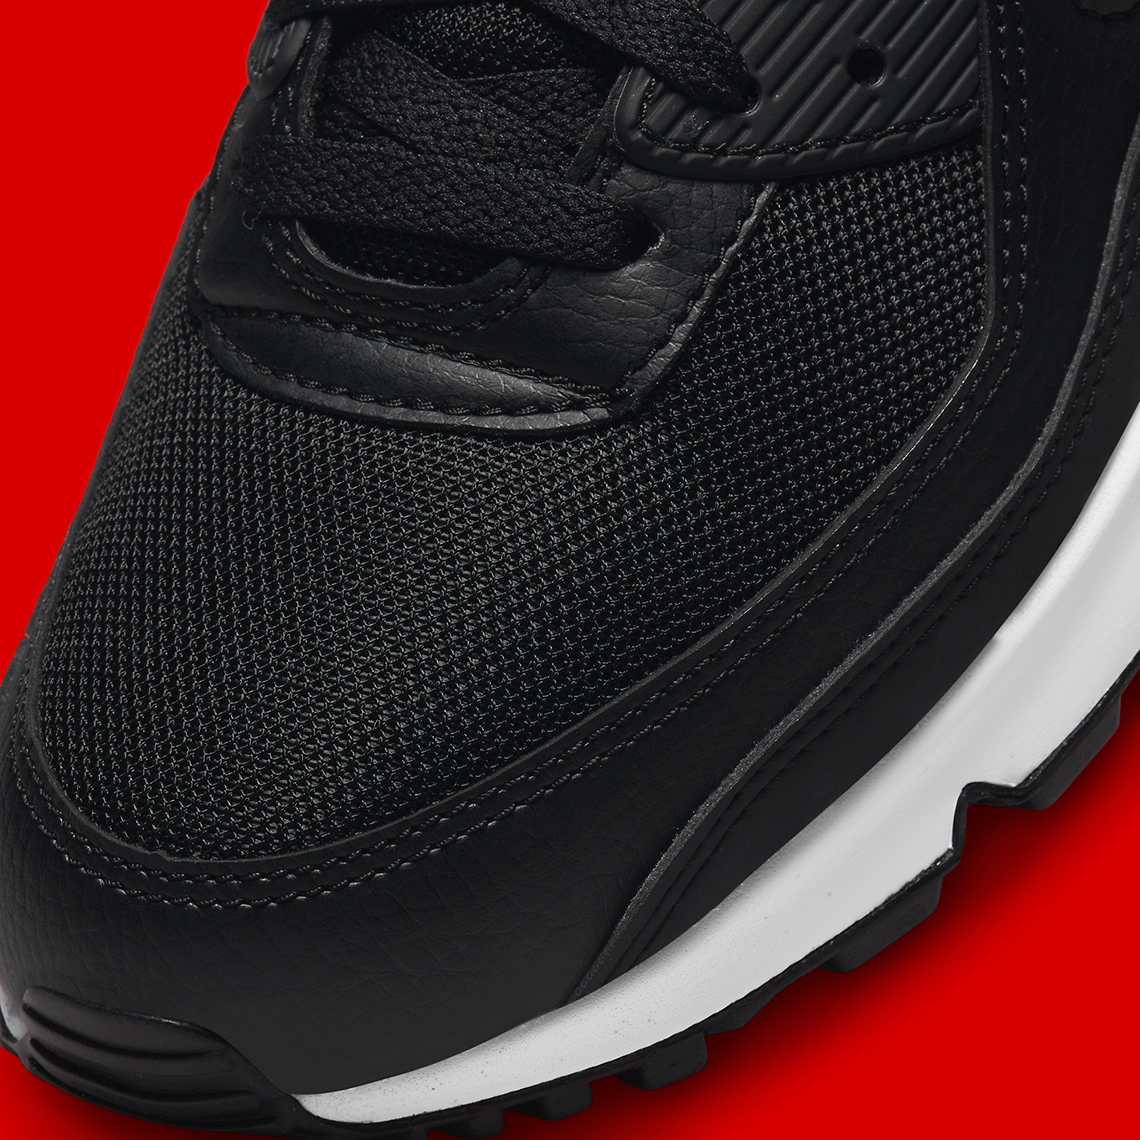 Nike Air Max 90 Jewel Black Red Dv3503 001 Release Date 5